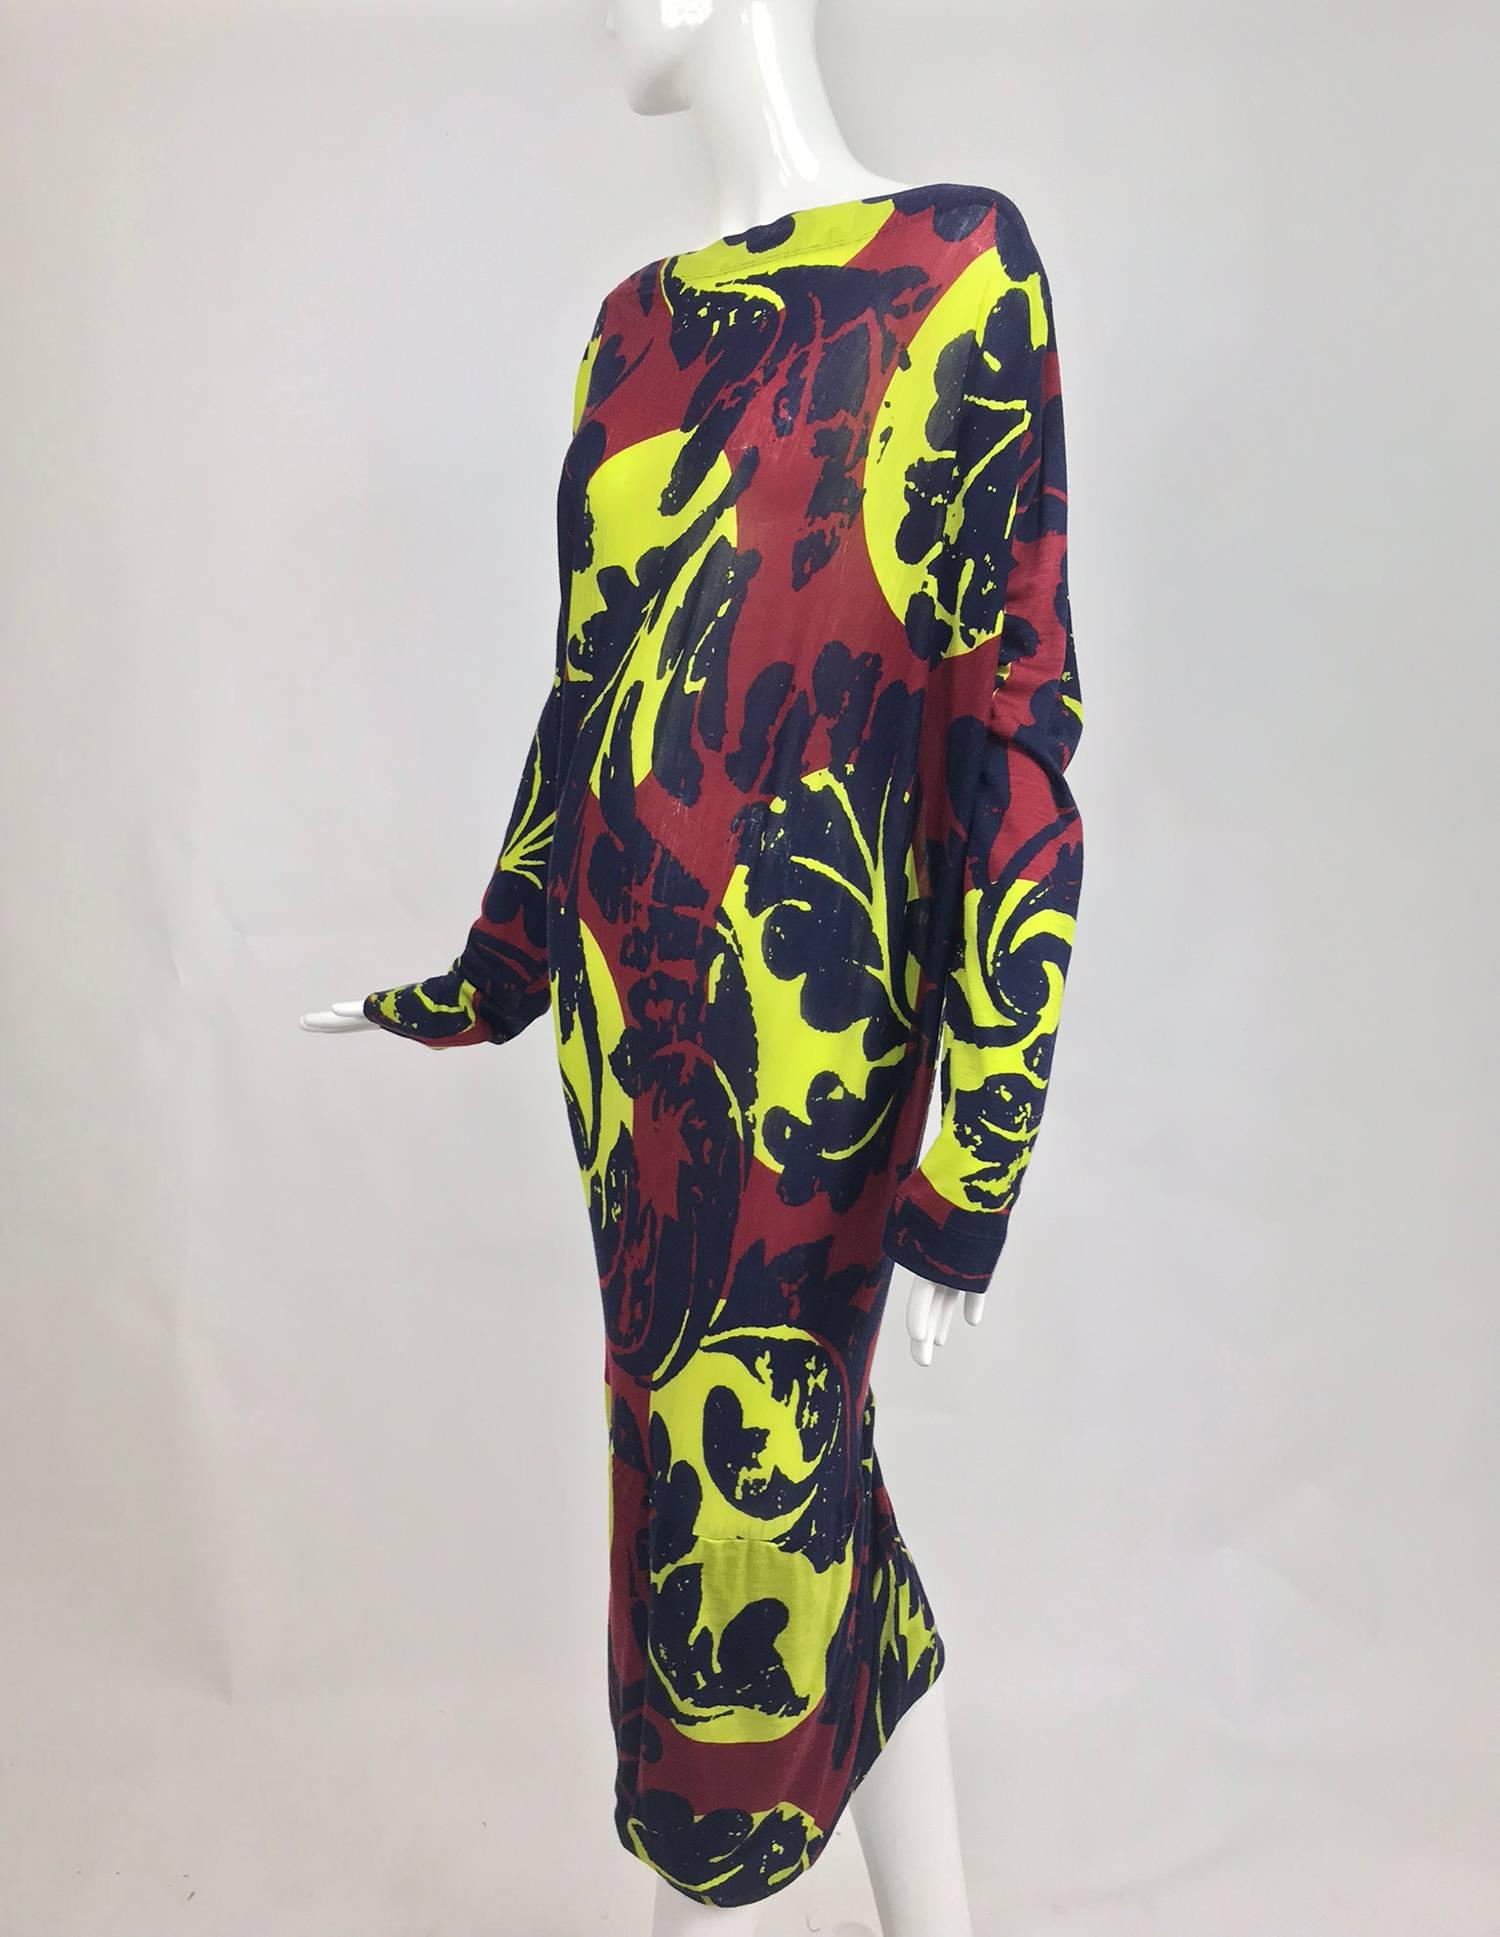 Vivienne Westwood Anglomania asymetrical print knit jersey dress 2